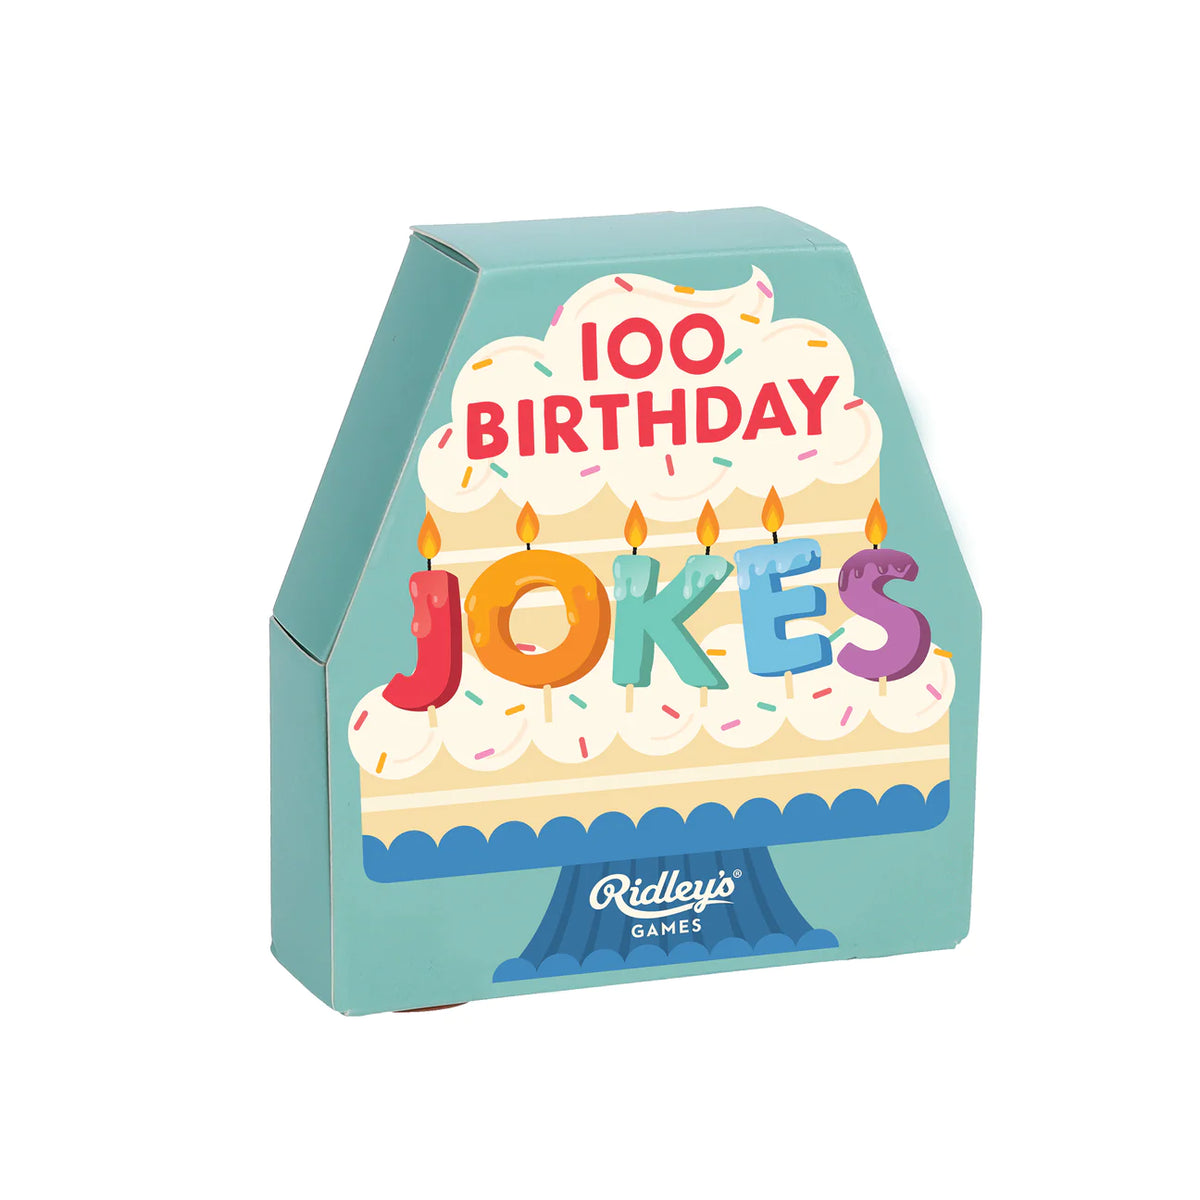 100 Birthday Jokes Cover